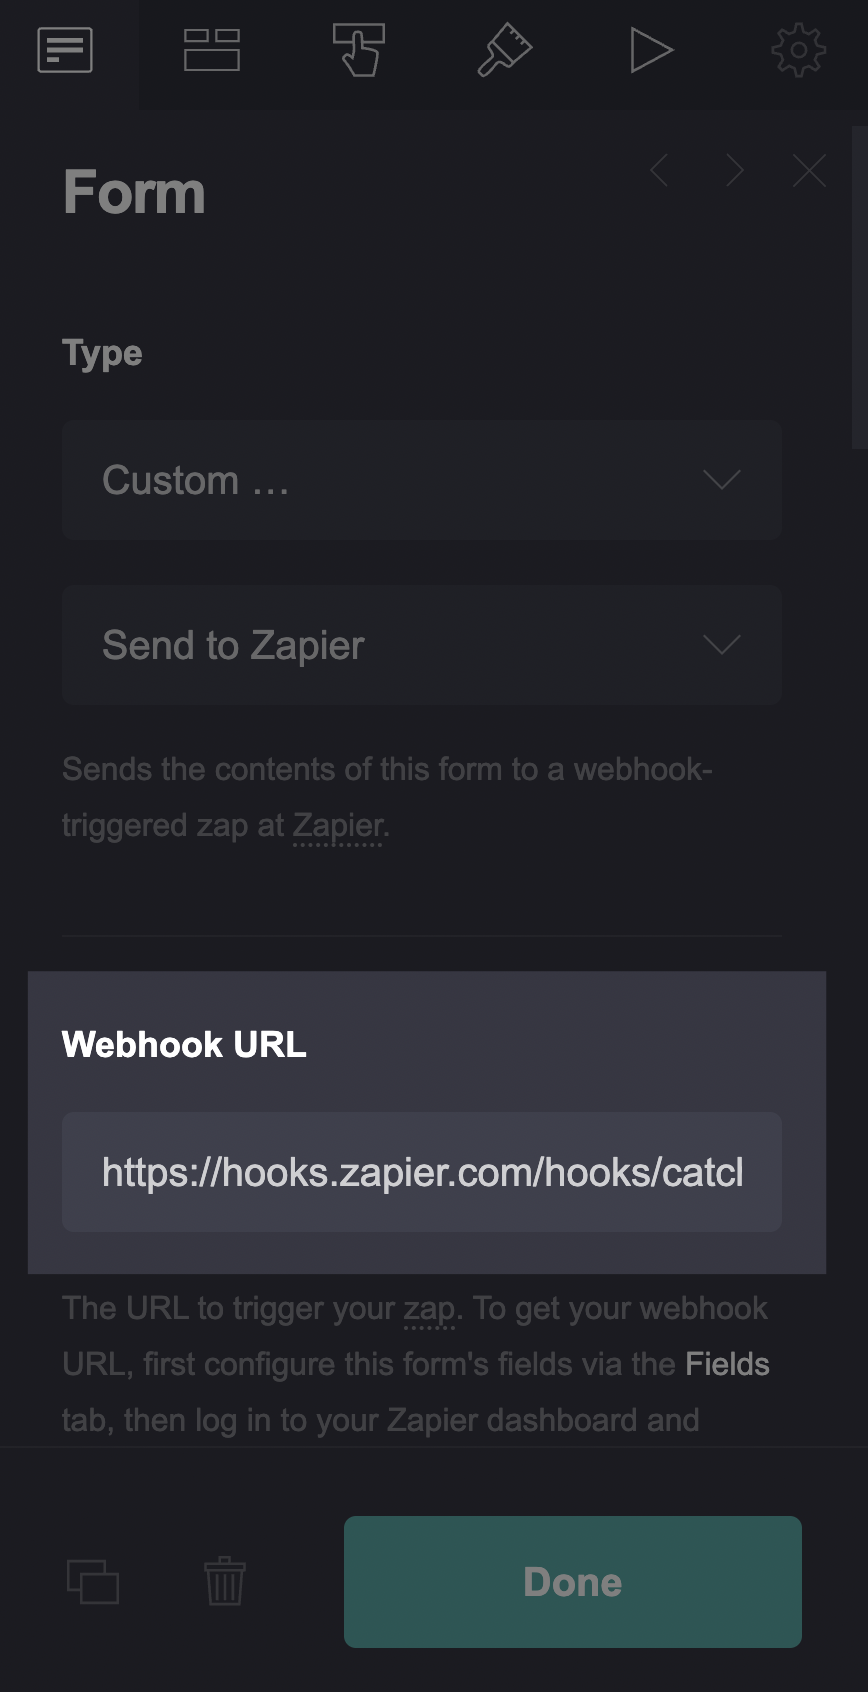 A screenshot highlighting the Webhook URL field of a custom form settings in Carrd.